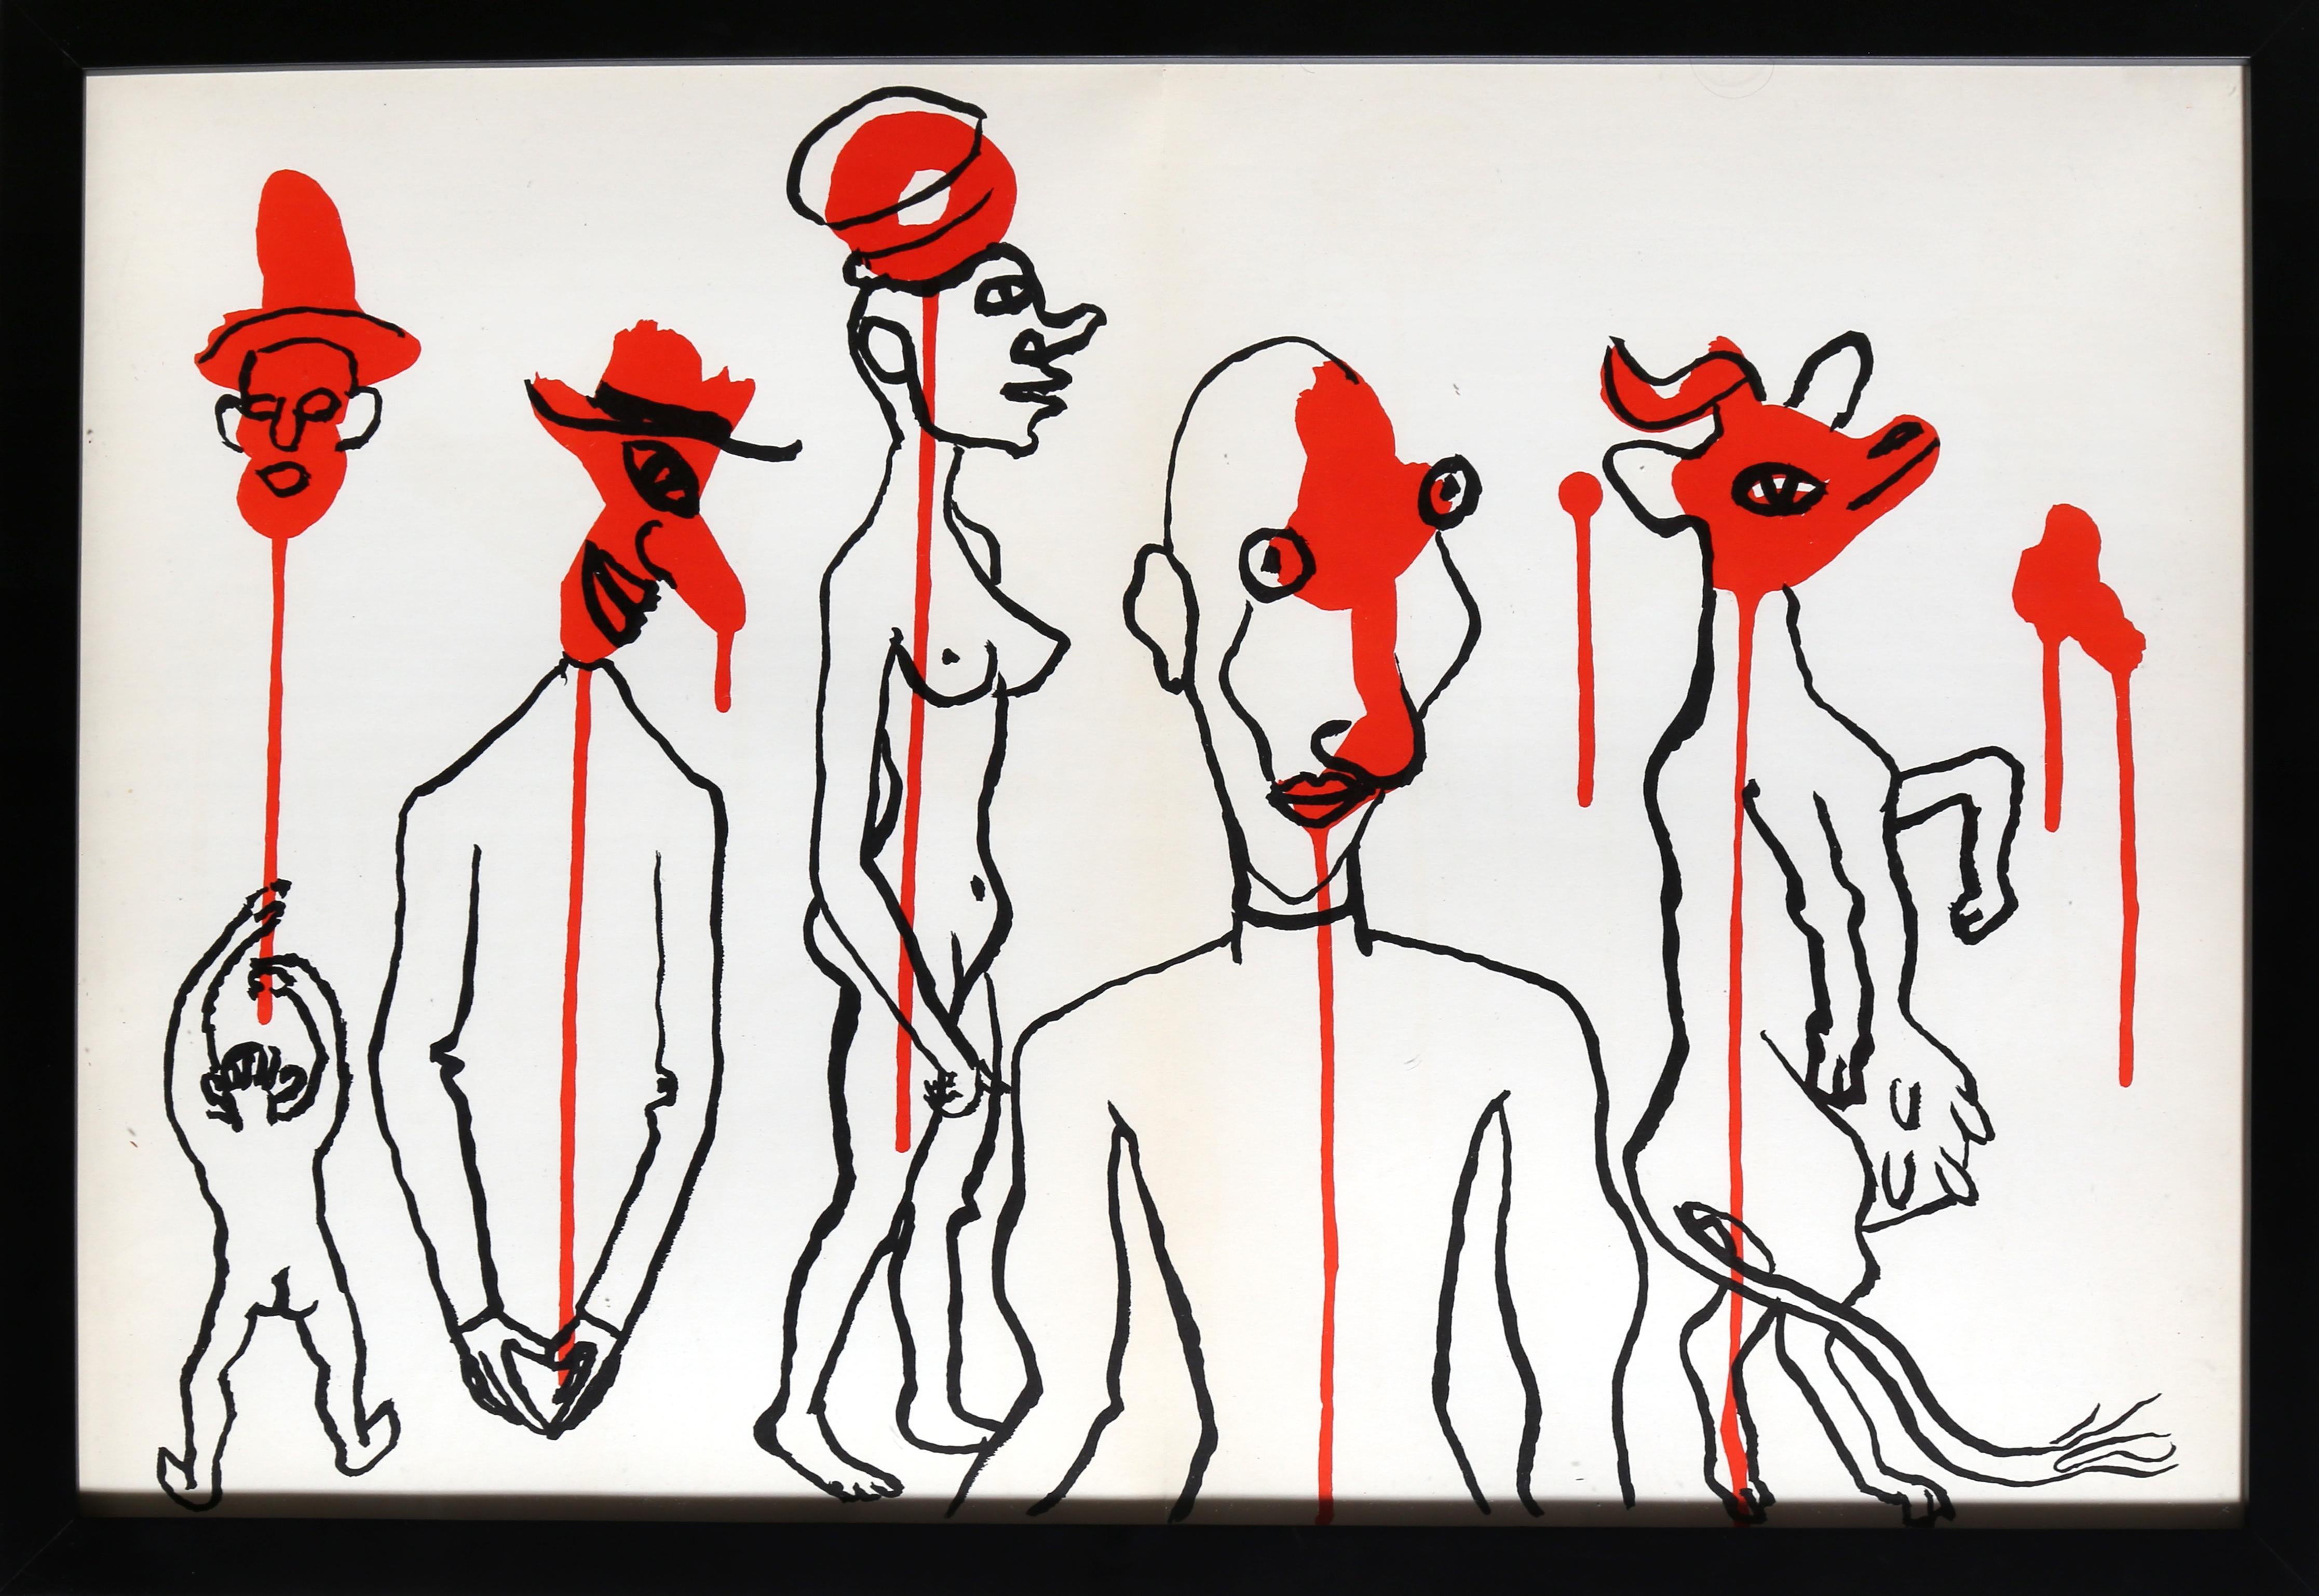 Where is Alexander Calder’s art?